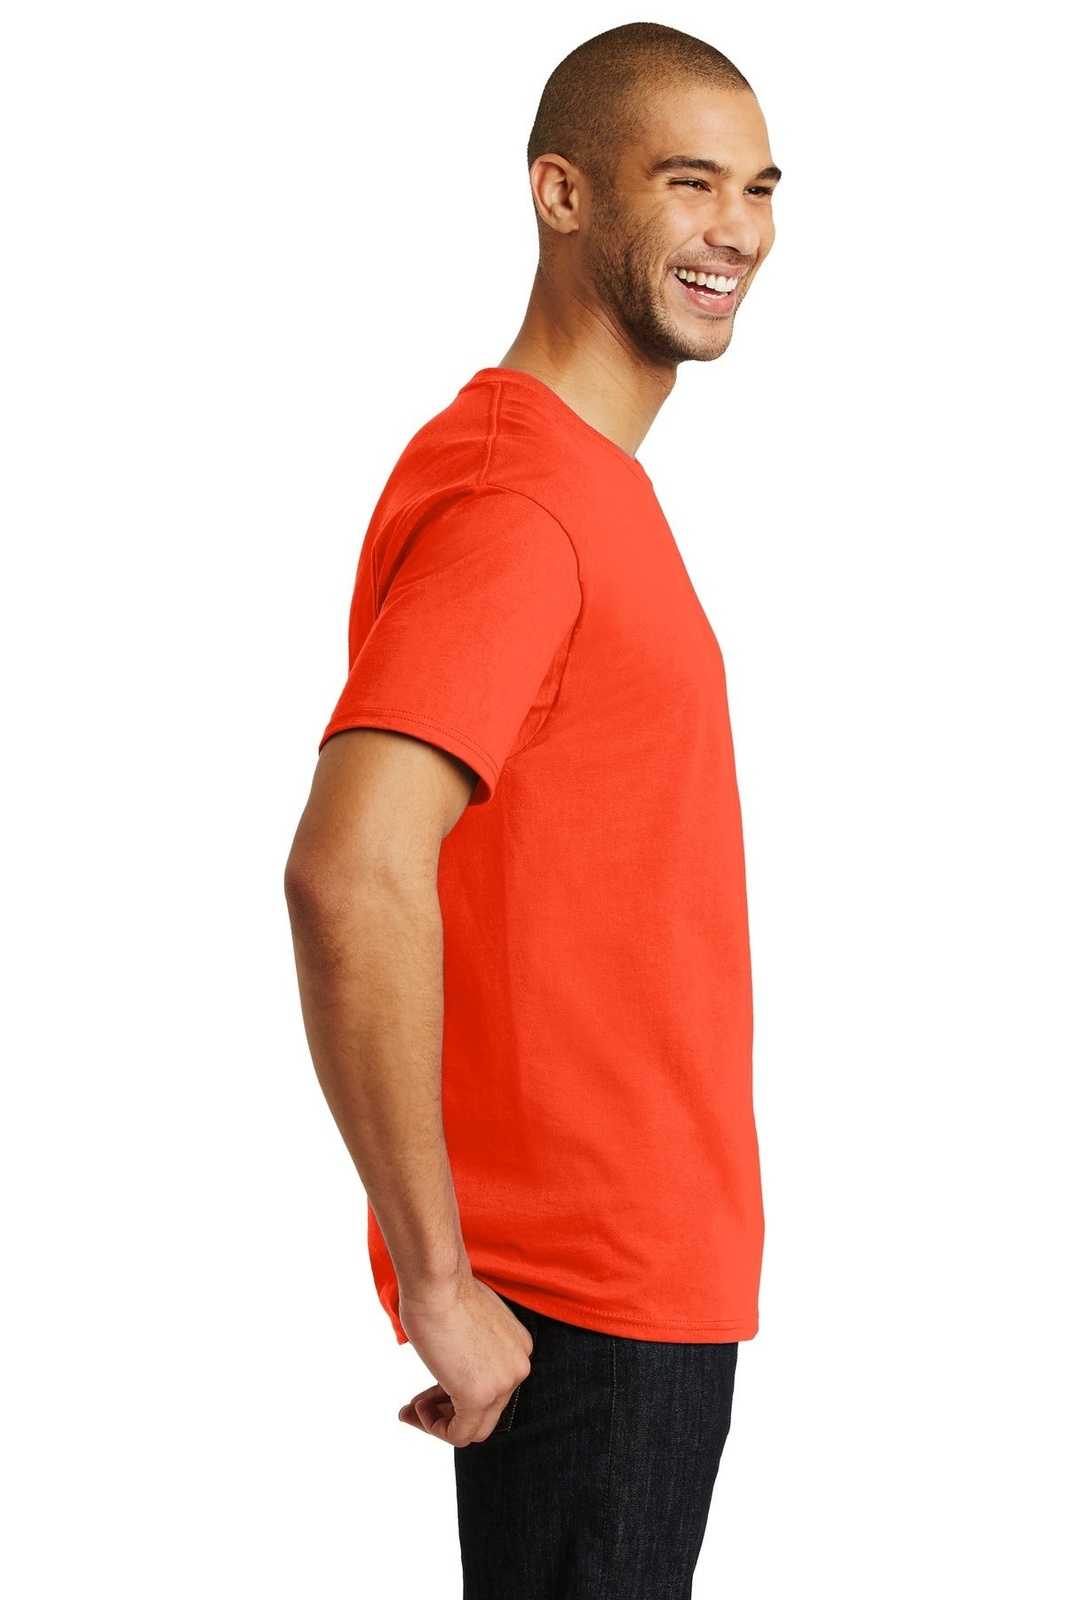 Hanes 5250 Tagless 100% Cotton T-Shirt - Orange - HIT a Double